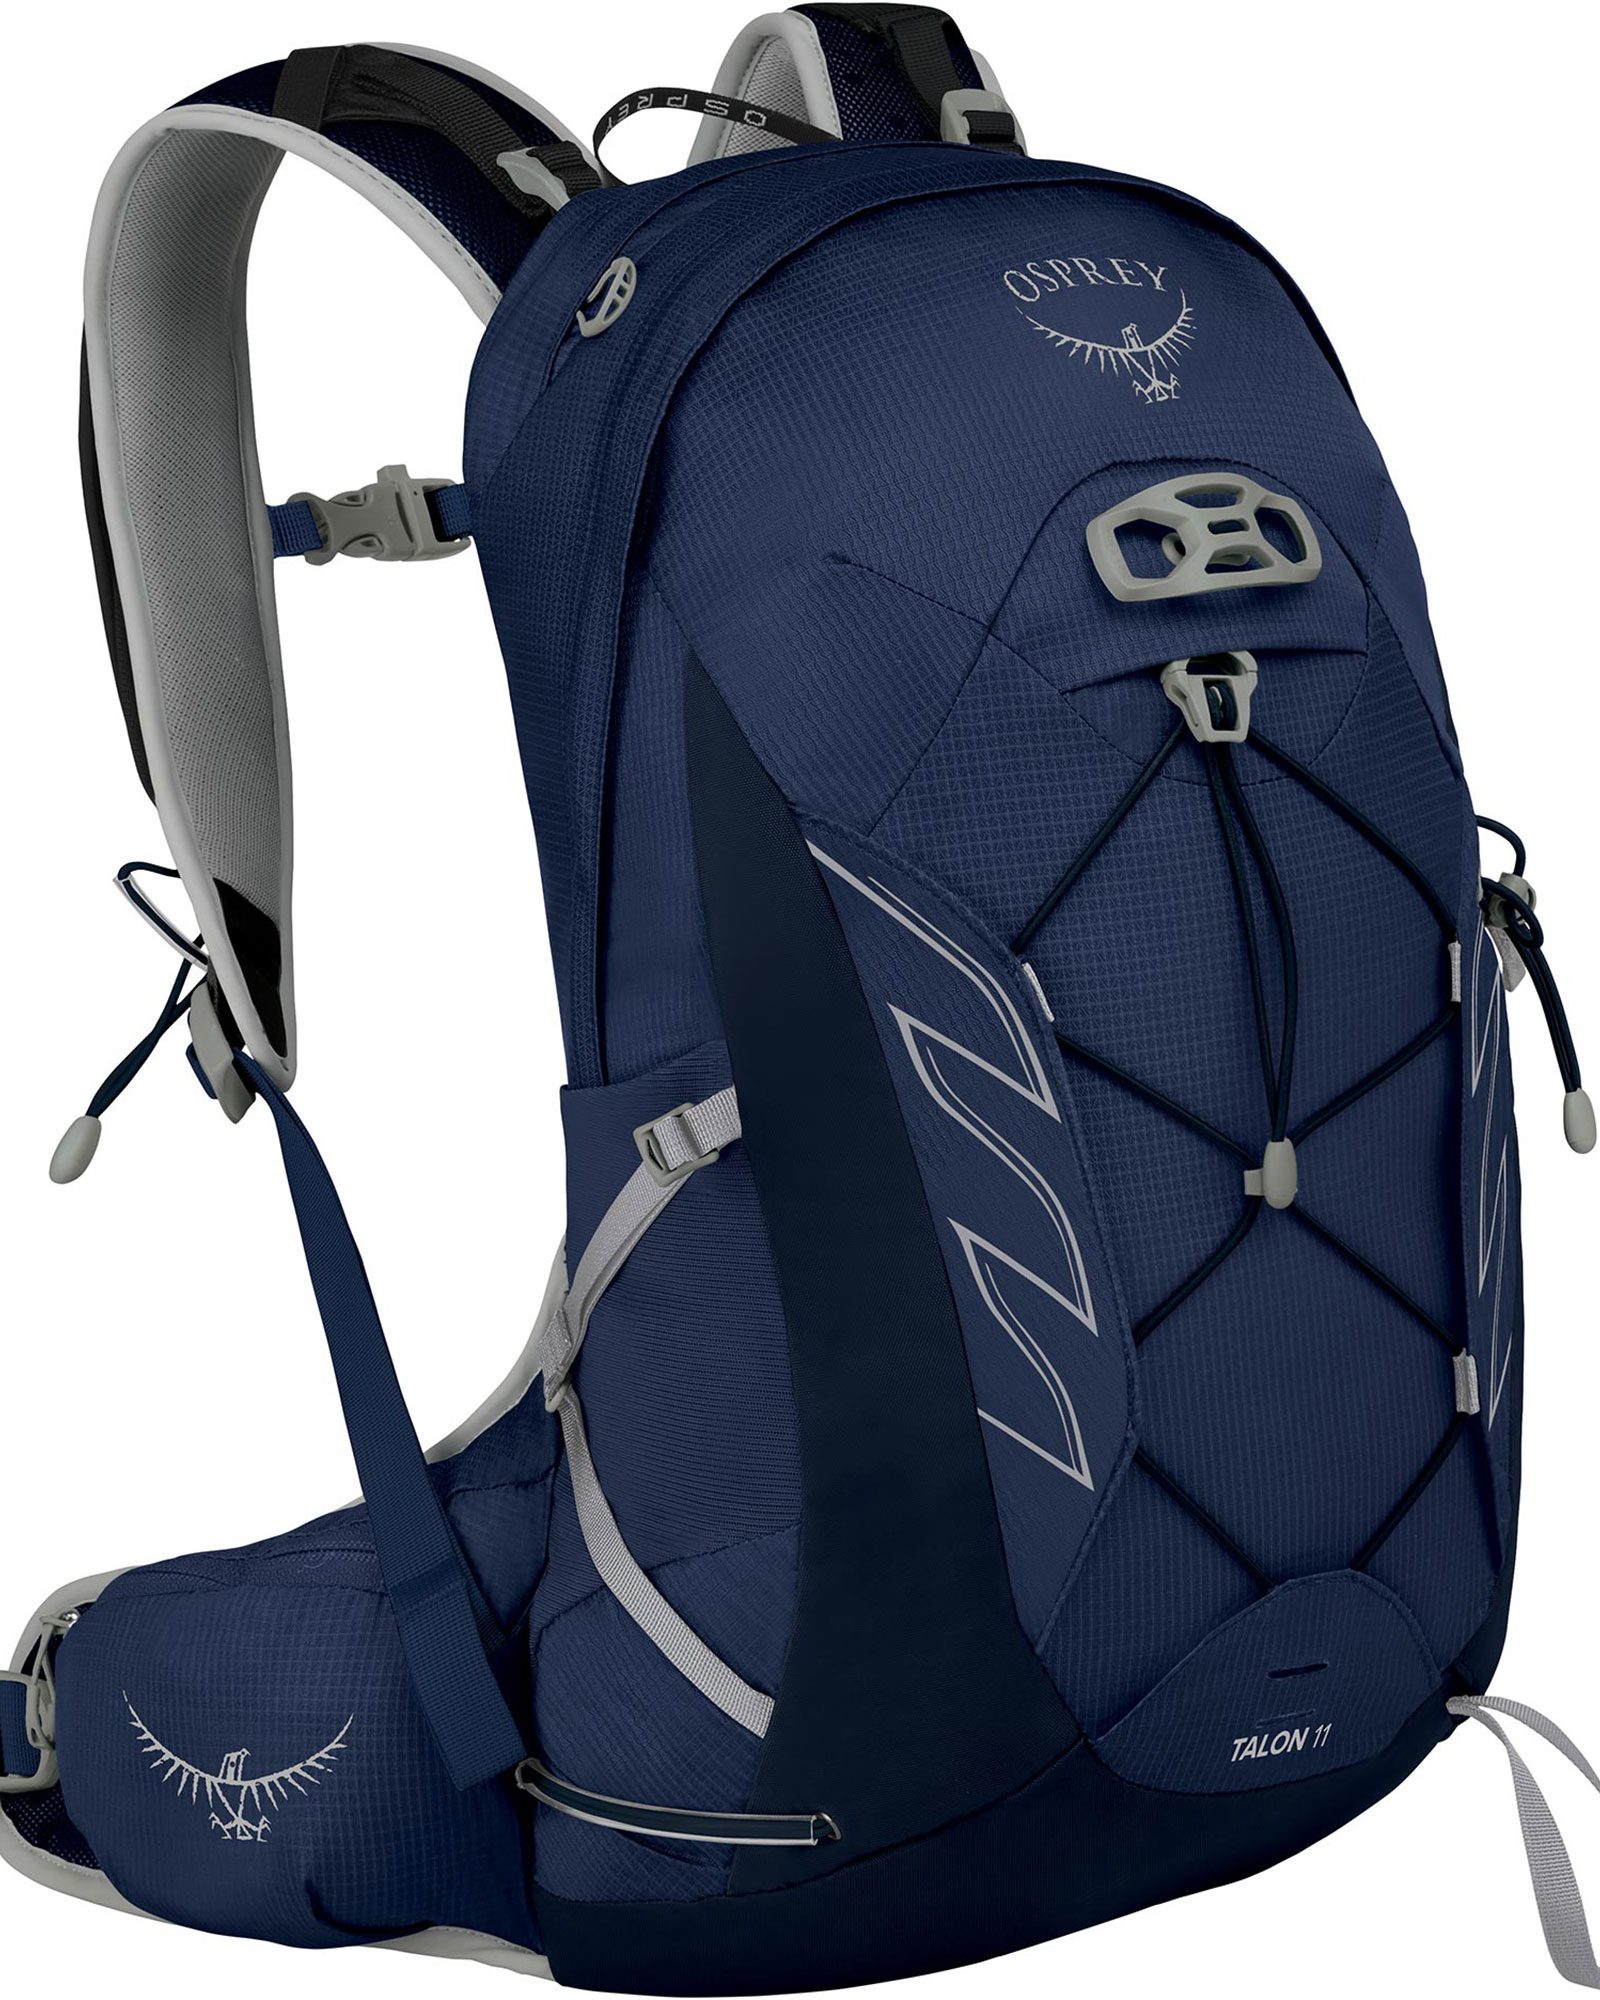 Osprey Talon 11 Backpack - Ceramic Blue S/M